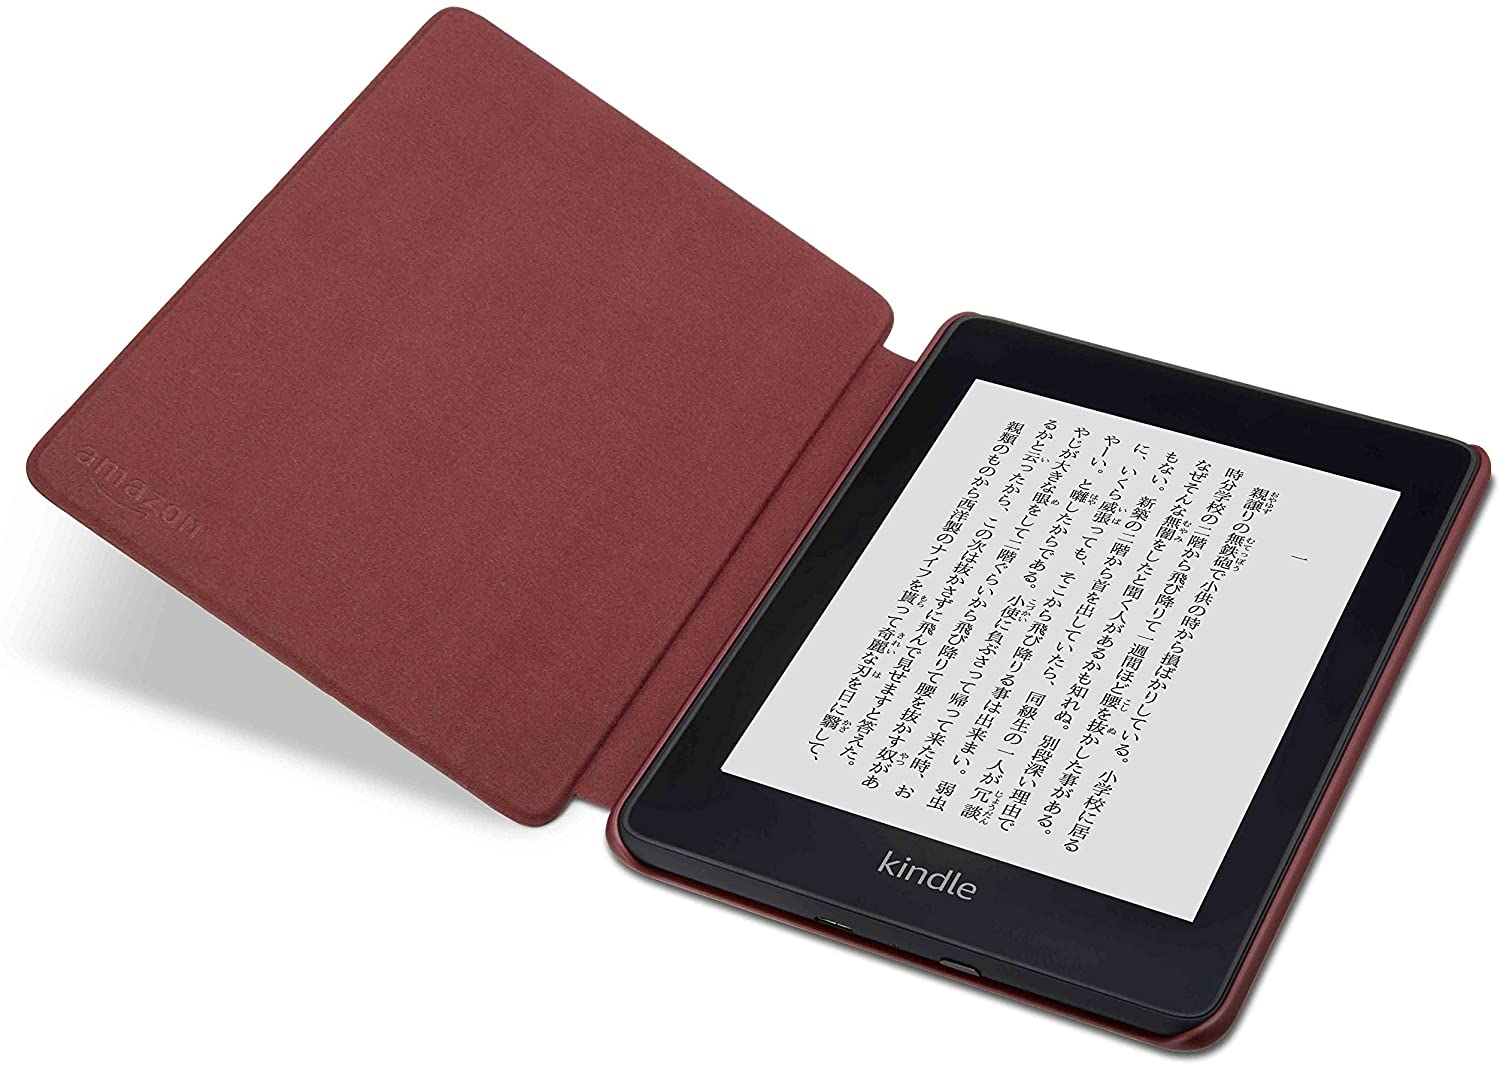 Amazon】Kindle Paperwhite wifi 32GB 電子書籍リーダー (純正カバー 